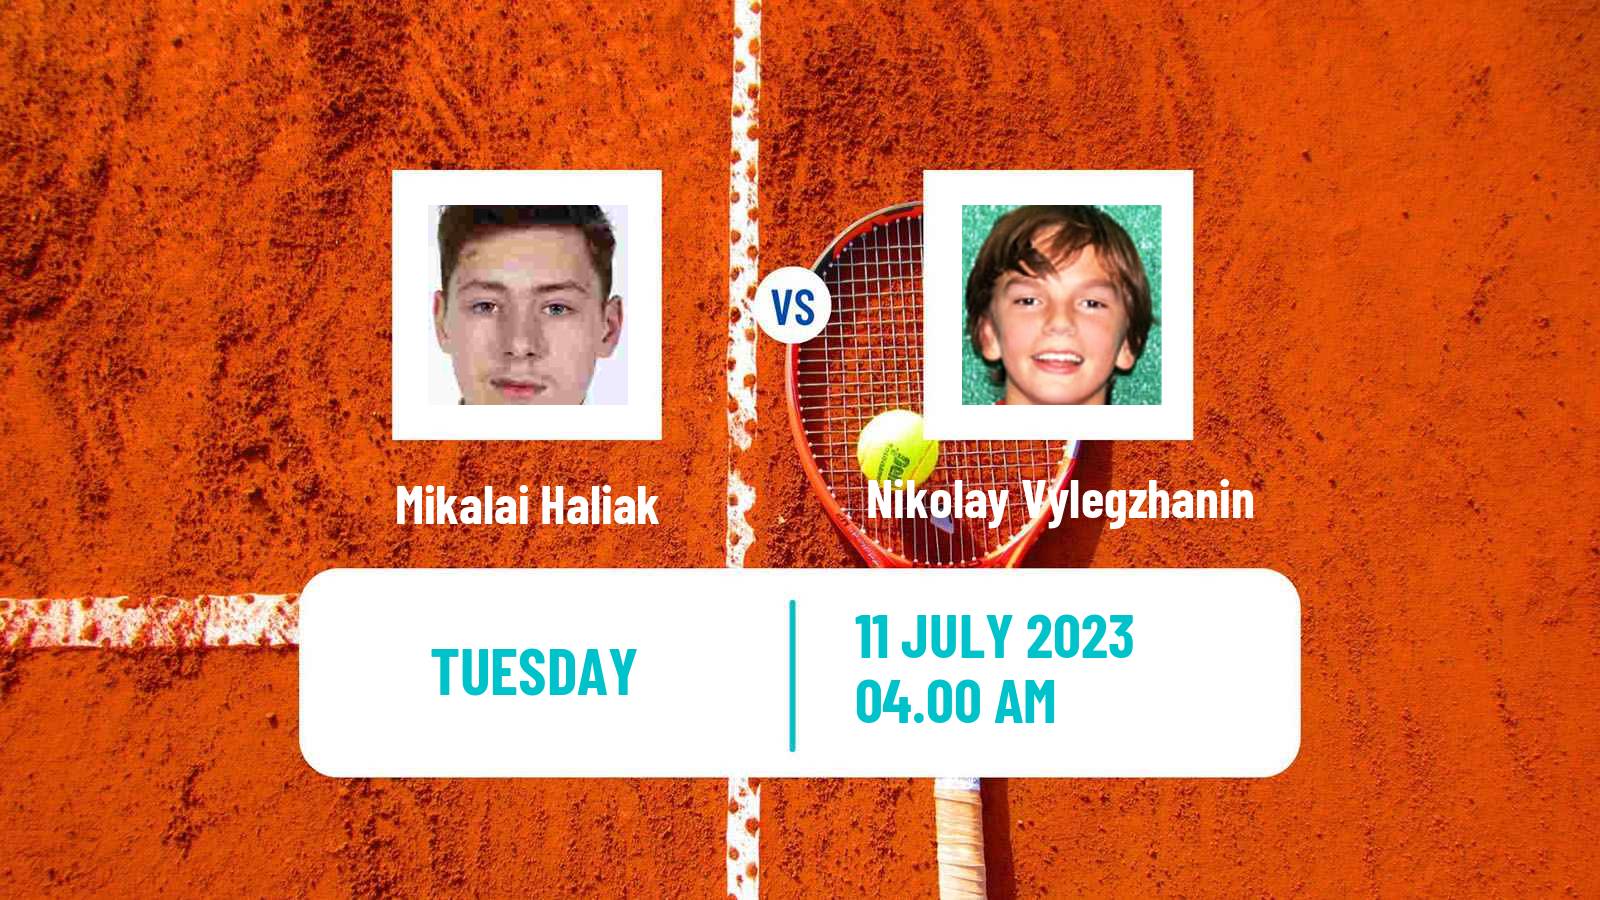 Tennis ITF M25 Uriage Men 2023 Mikalai Haliak - Nikolay Vylegzhanin